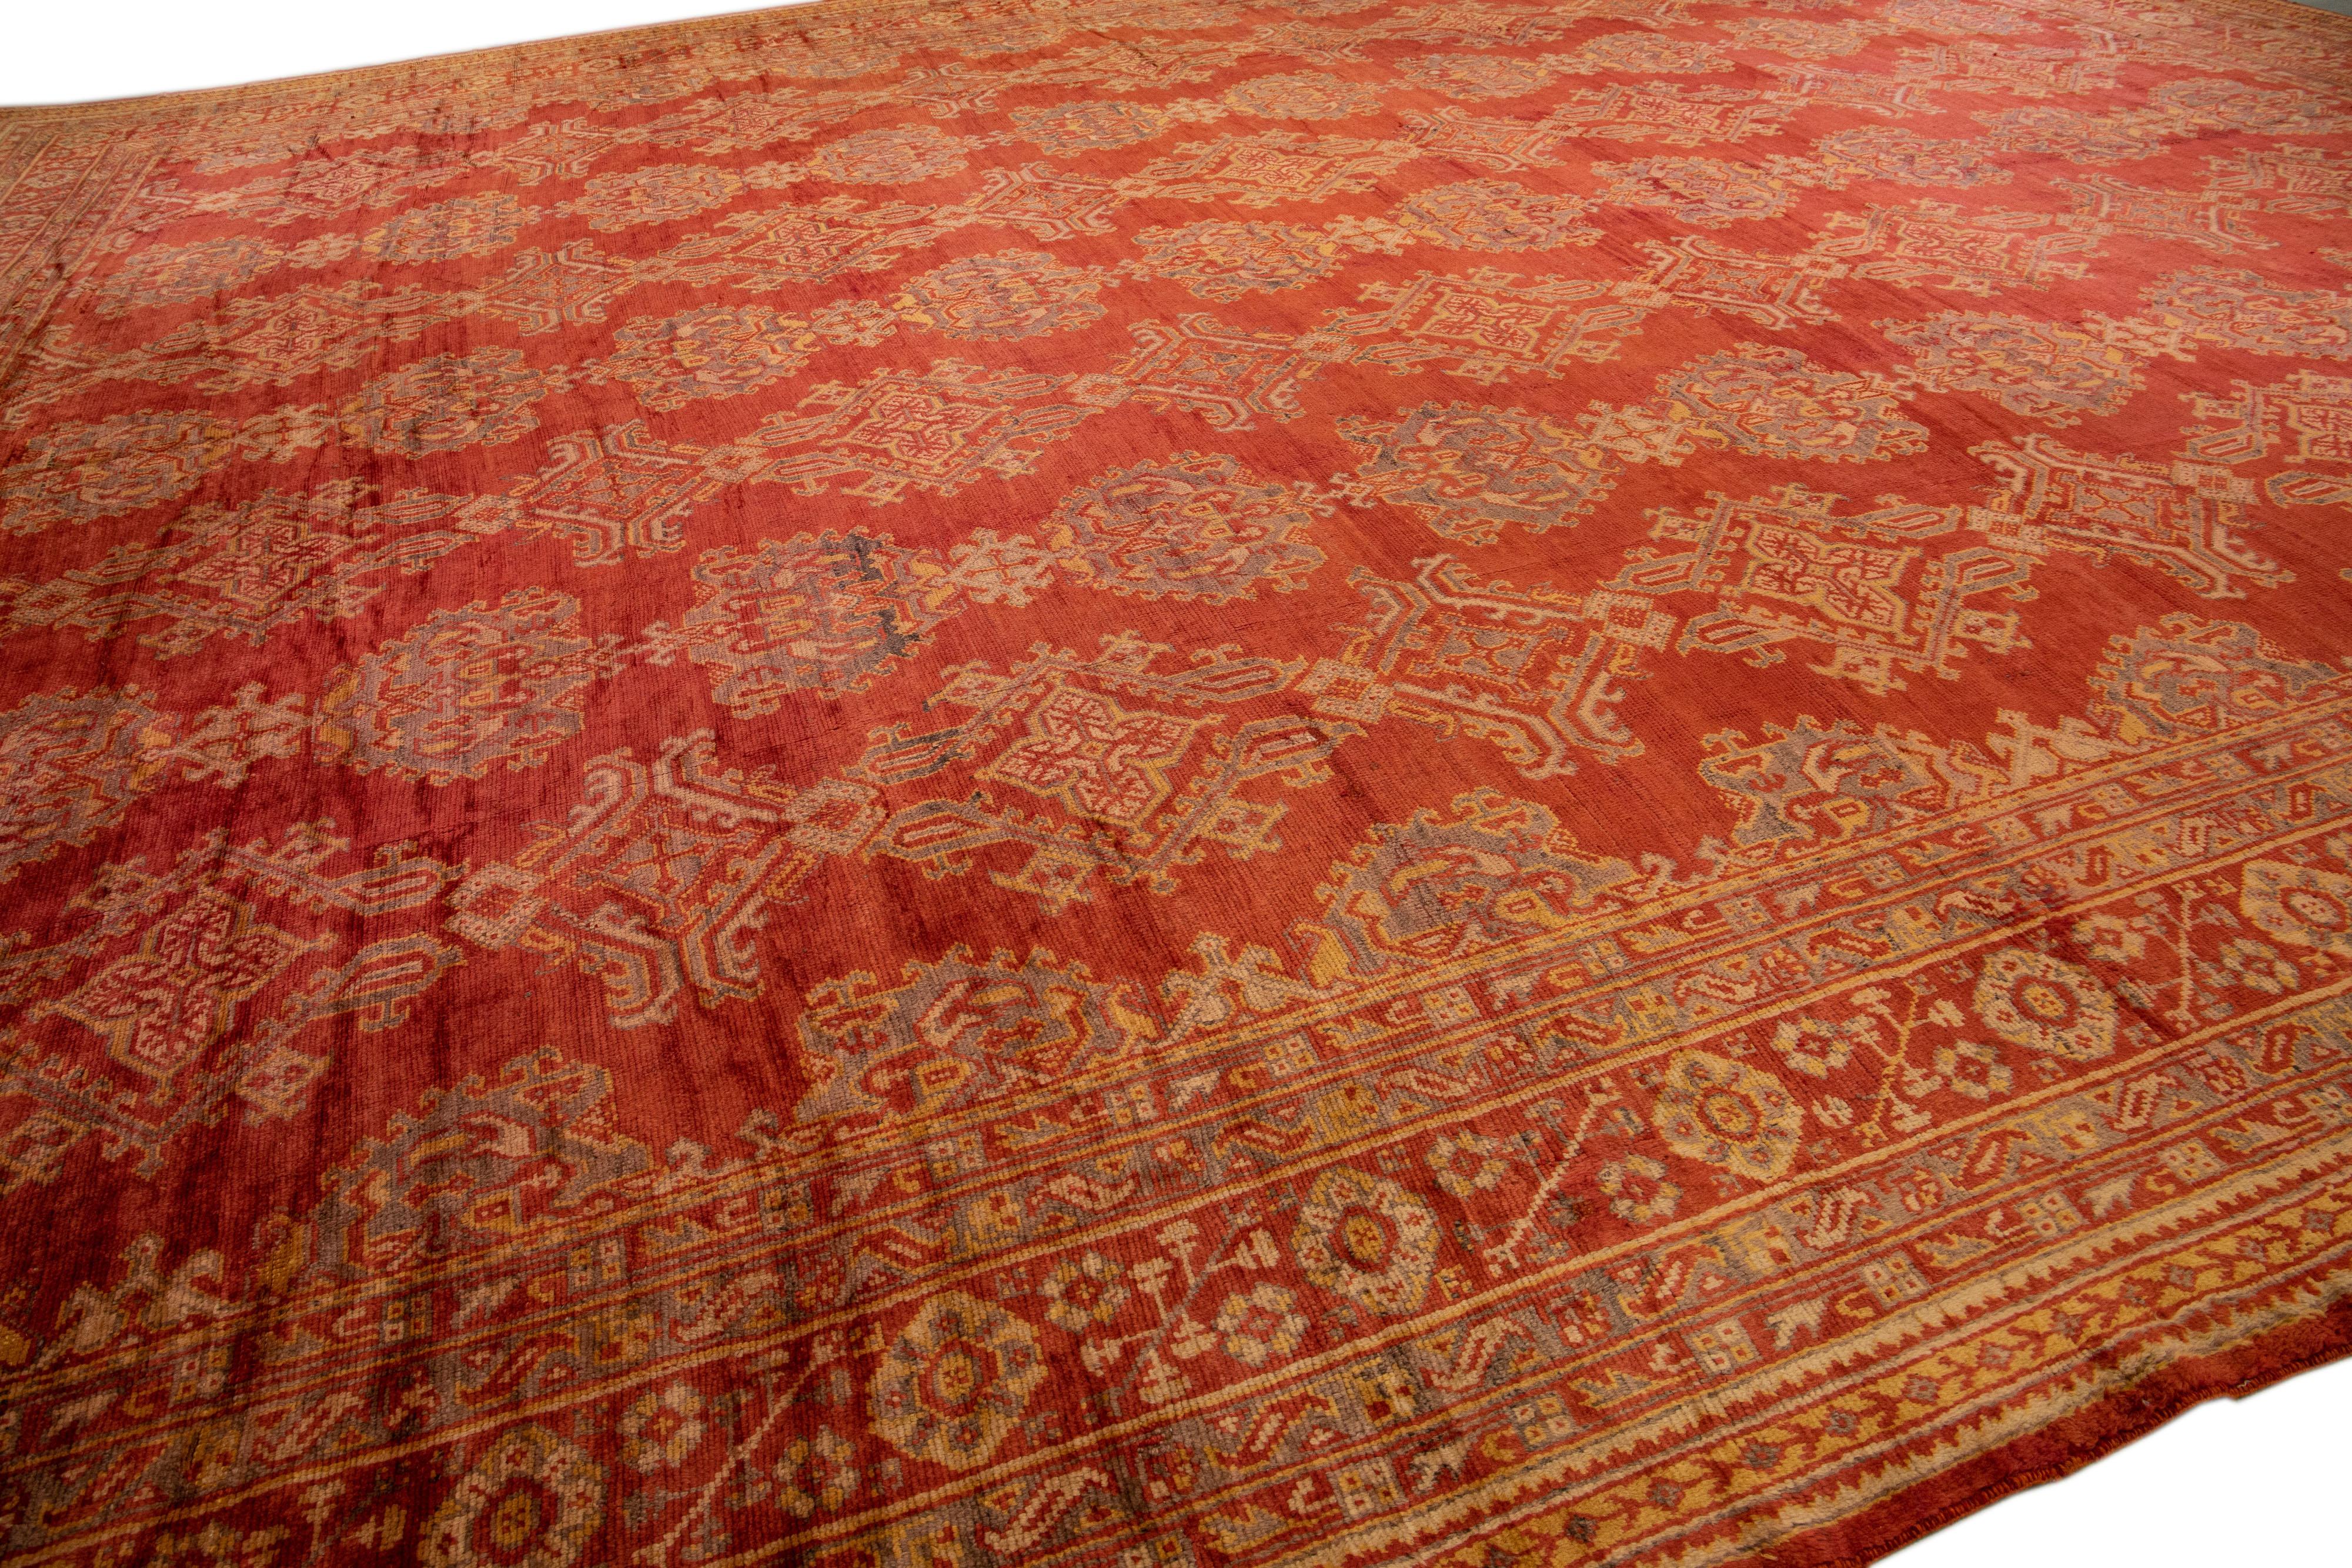 19th Century Antique Turkish Oushak Handmade Orange-Rust Wool Rug with Geometric Pattern For Sale